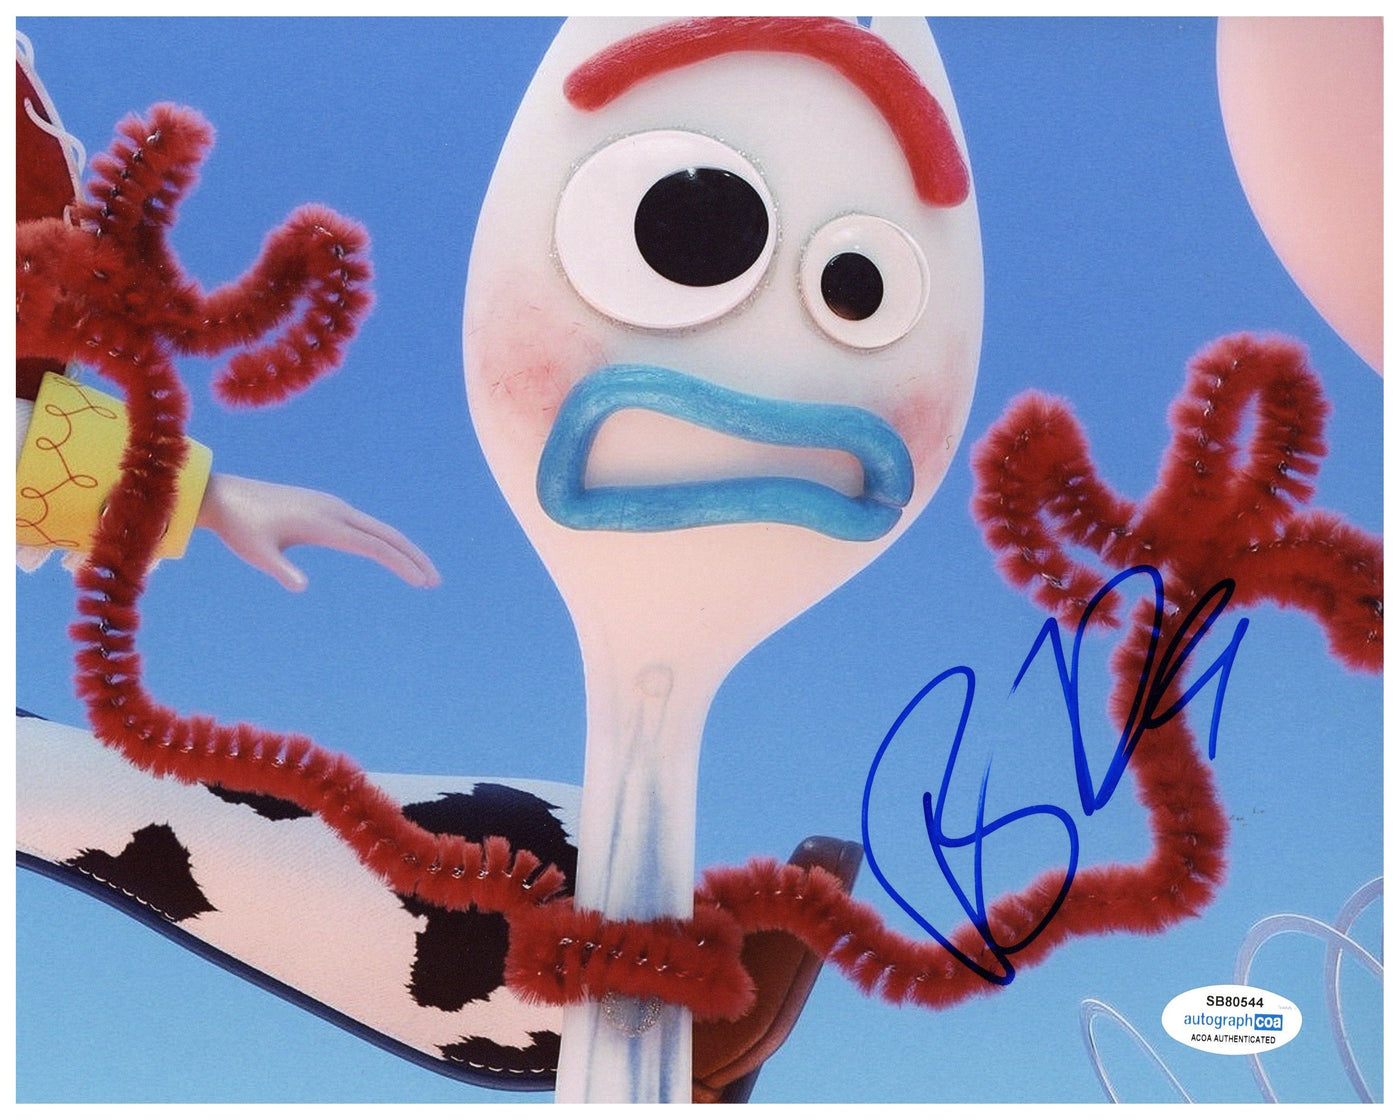 Tony Hale Signed 8x10 Photo Toy Story Forky Autographed ACOA